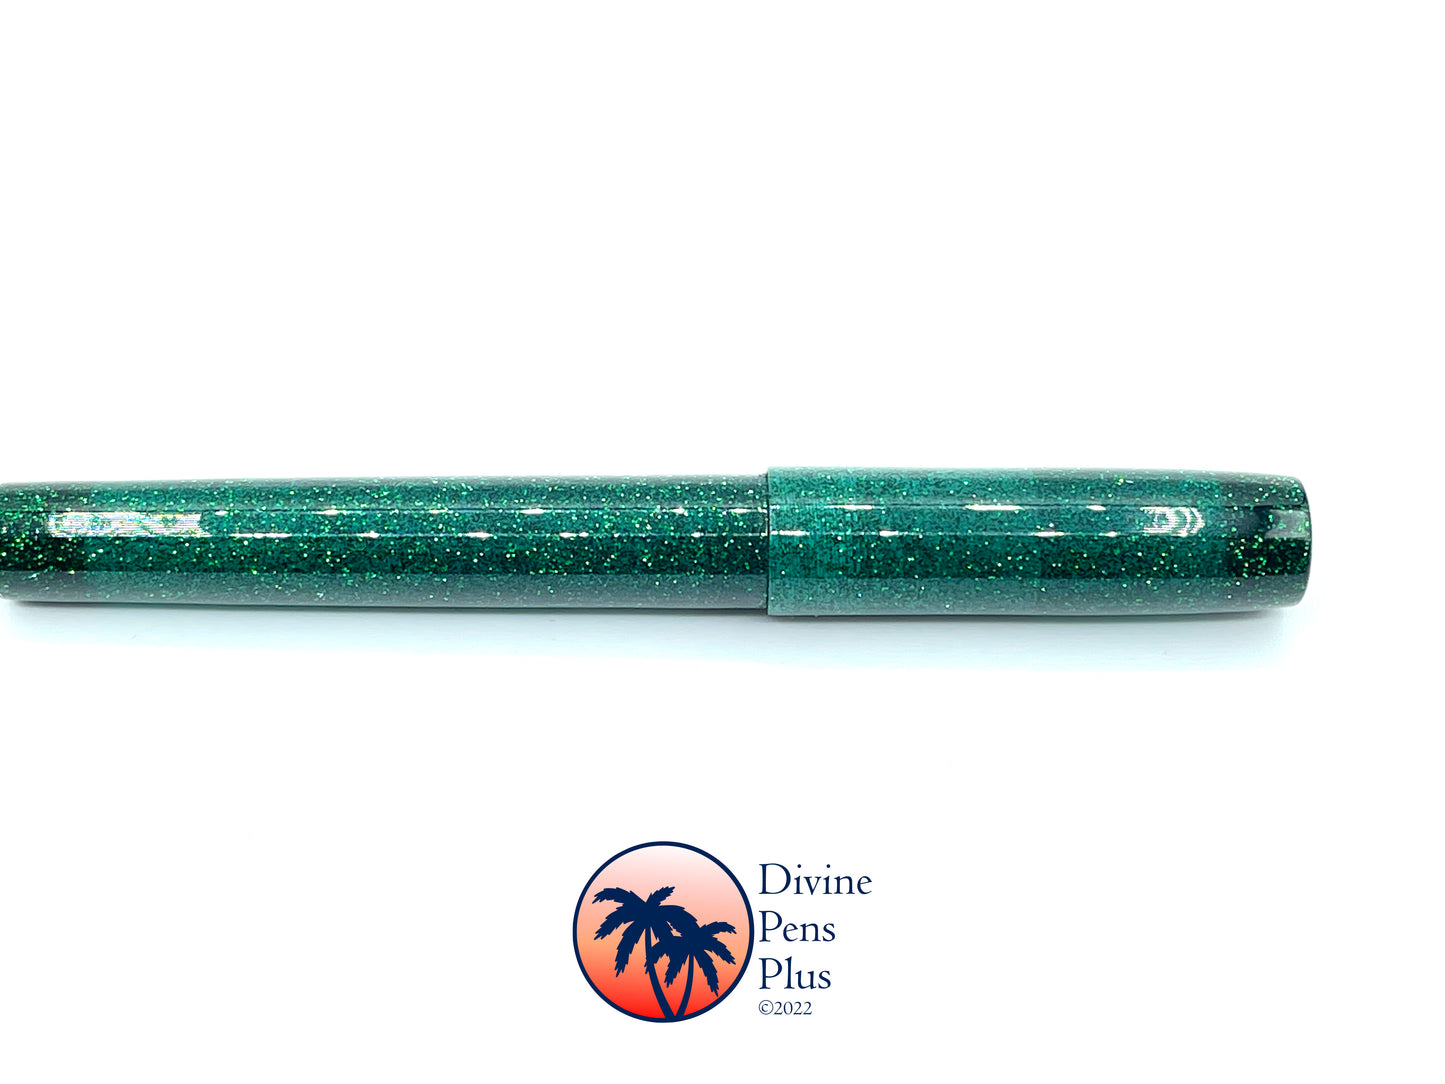 Spes Fountain Pen - "Emerald Green" Glitter